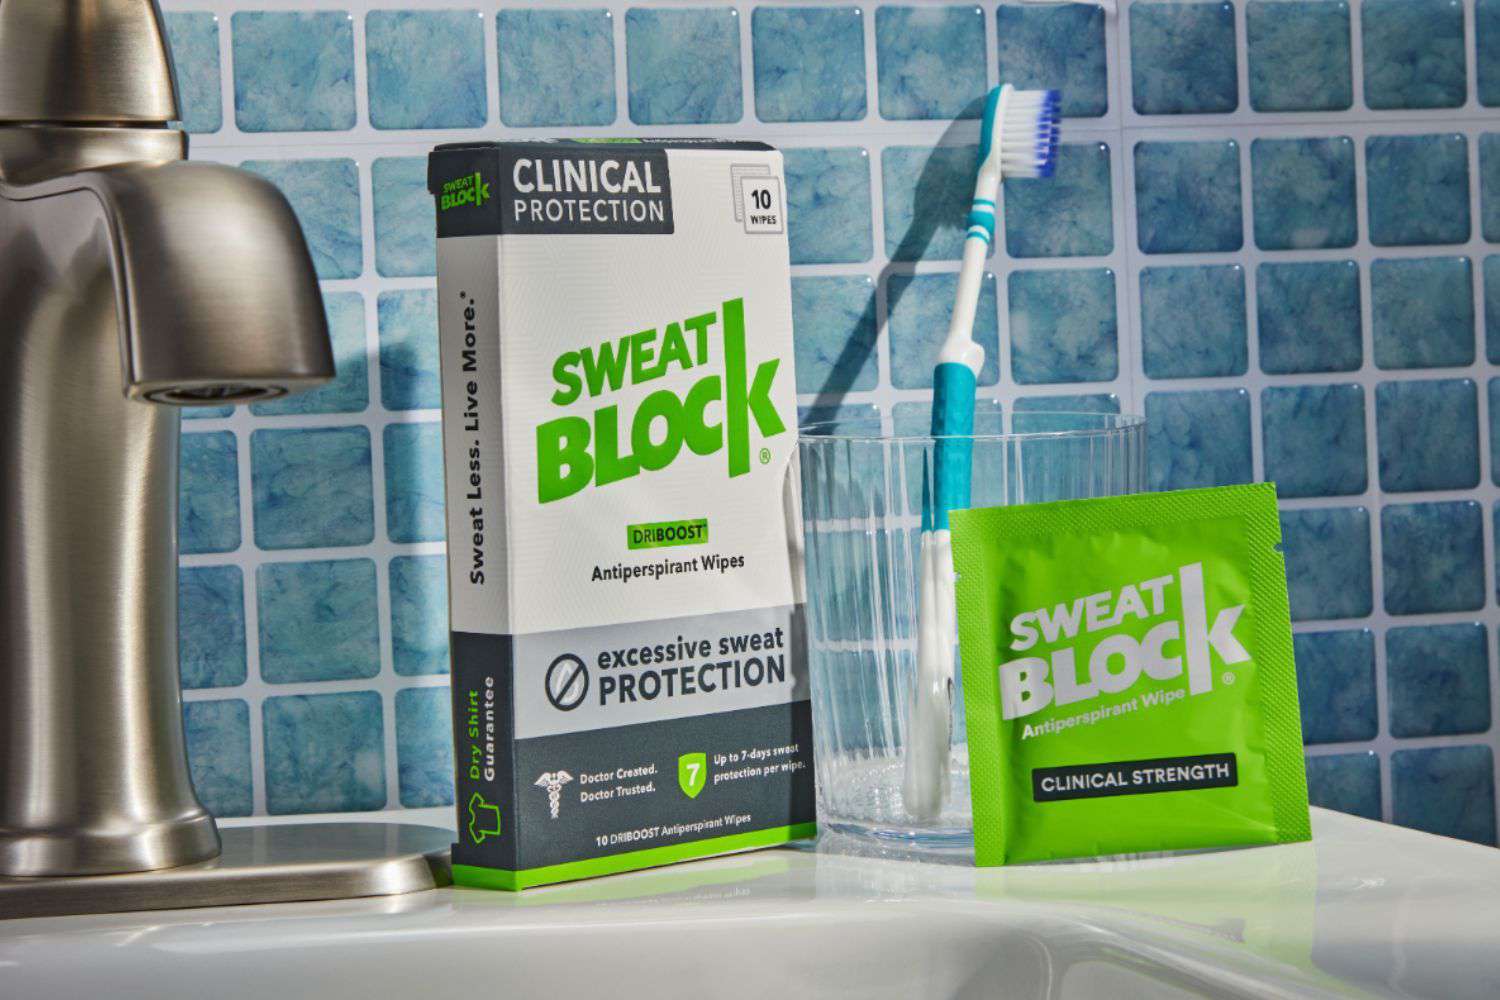 SweatBlock Clinical Strength DRIBOOST Antiperspirant Wipes on bathroom counter